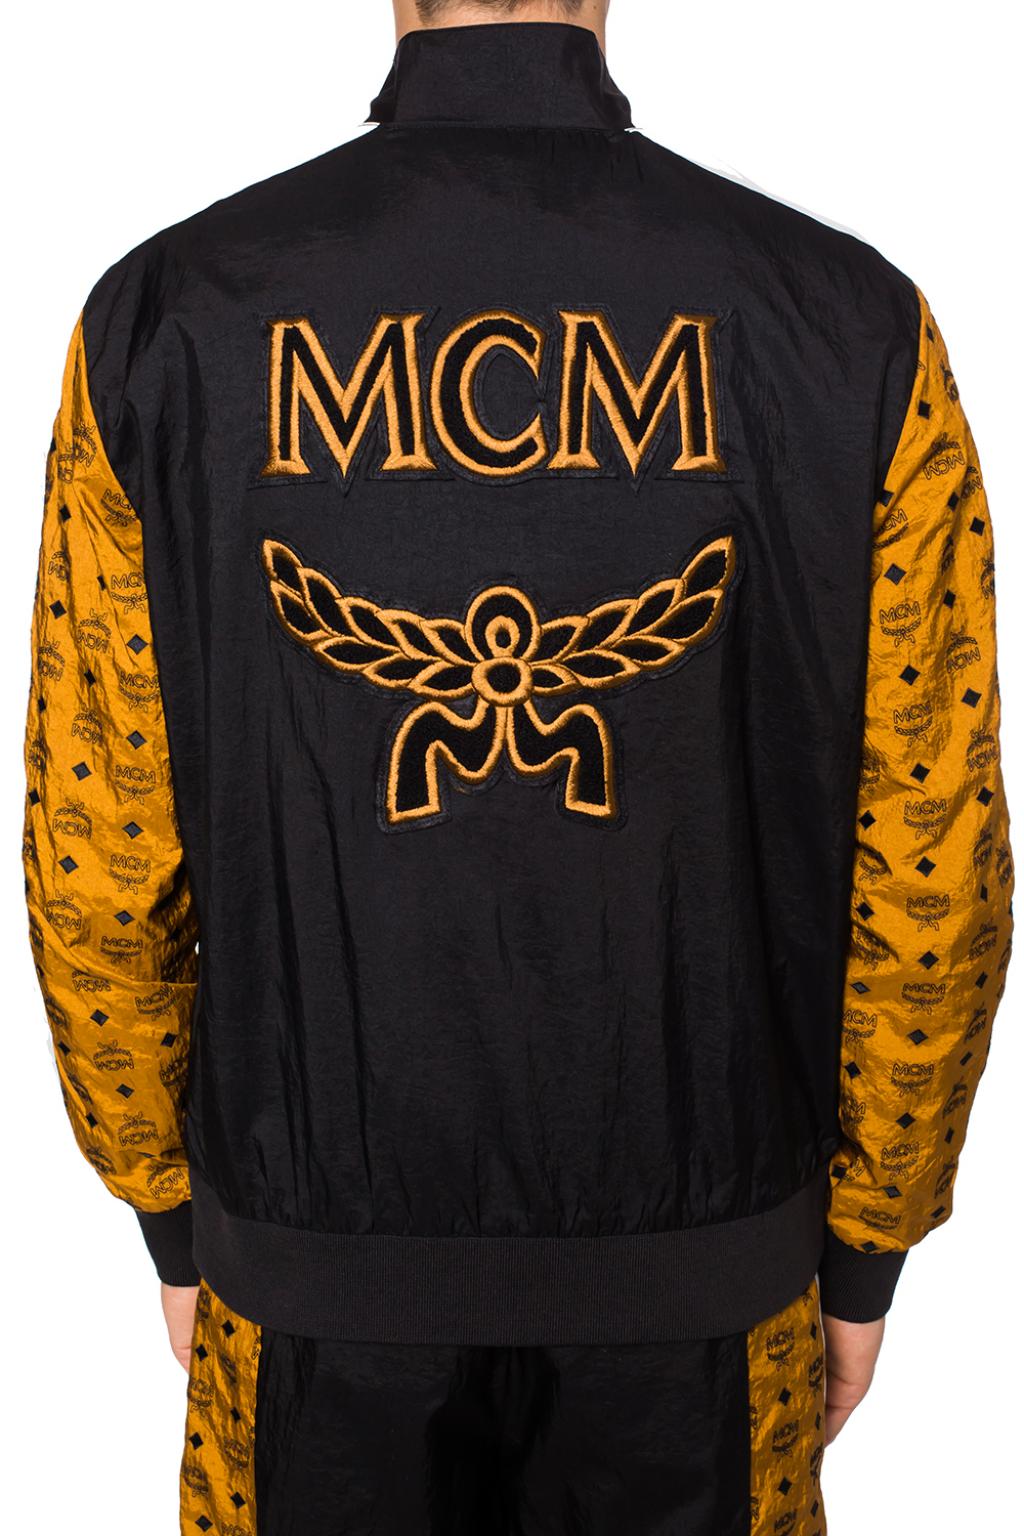 Mcm Varsity Jacket